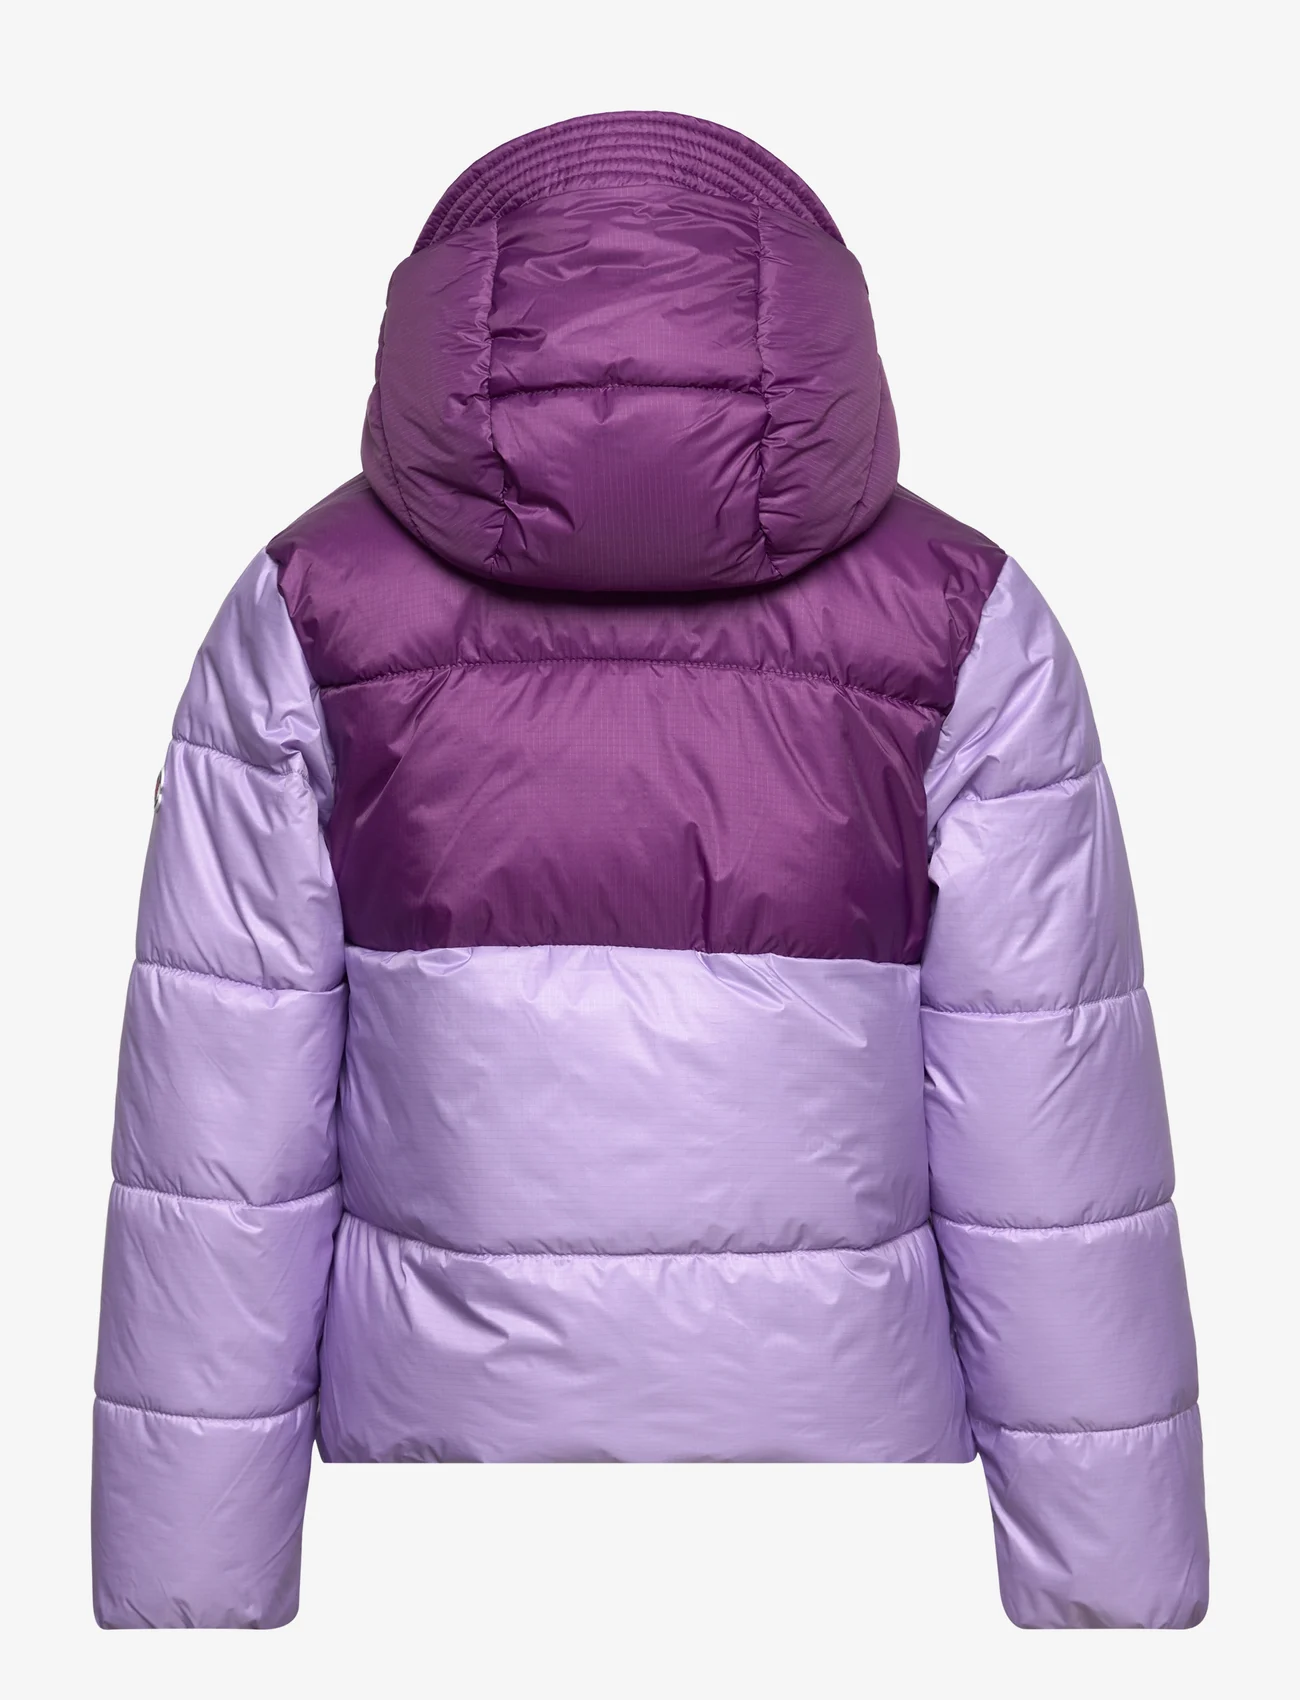 Champion - Hooded Jacket - isolerede jakker - purple rose - 1